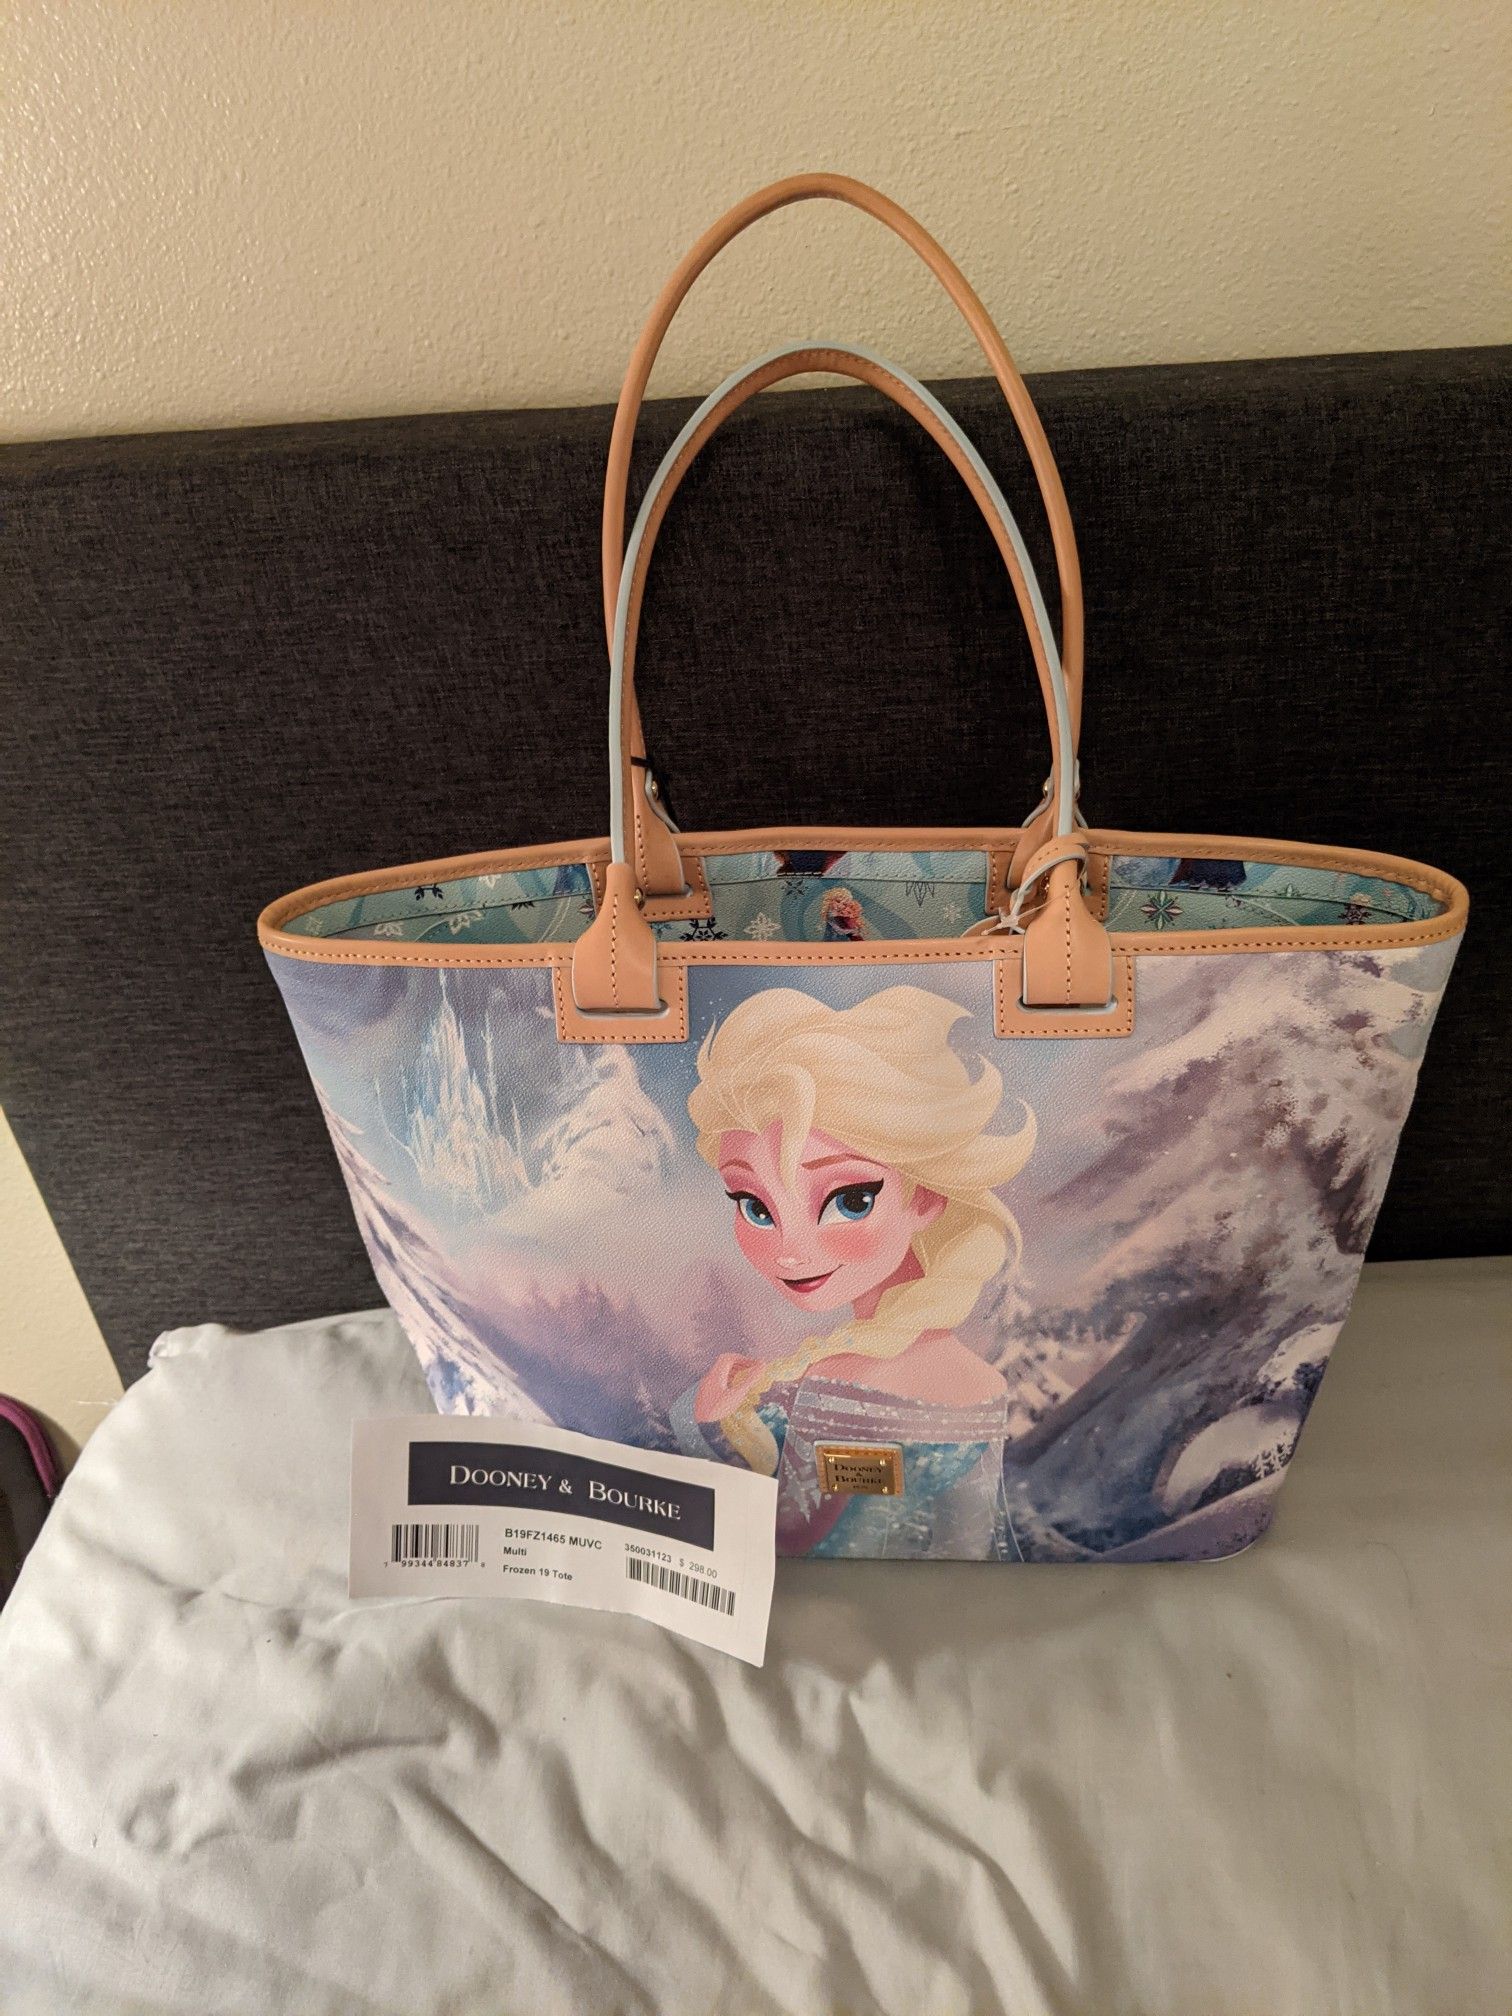 Disney Frozen Tote Bag by Dooney & Bourke